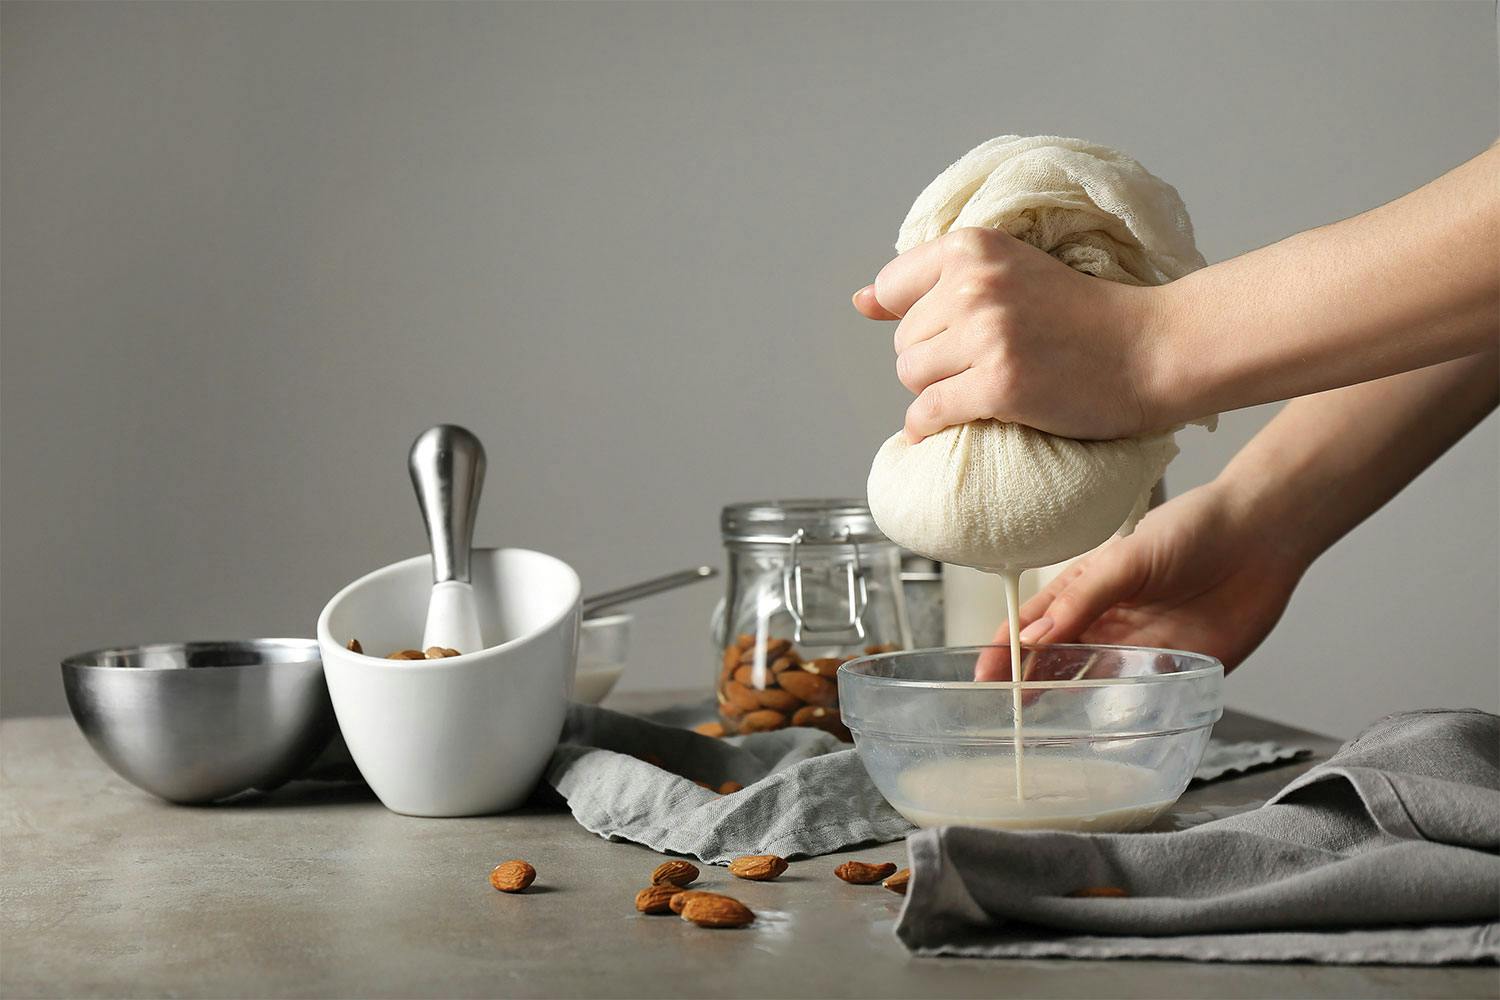 A person strains almond milk through a cloth into a glass bowl next to a jar of almonds, a metal bowl, & a mortar & pestle.